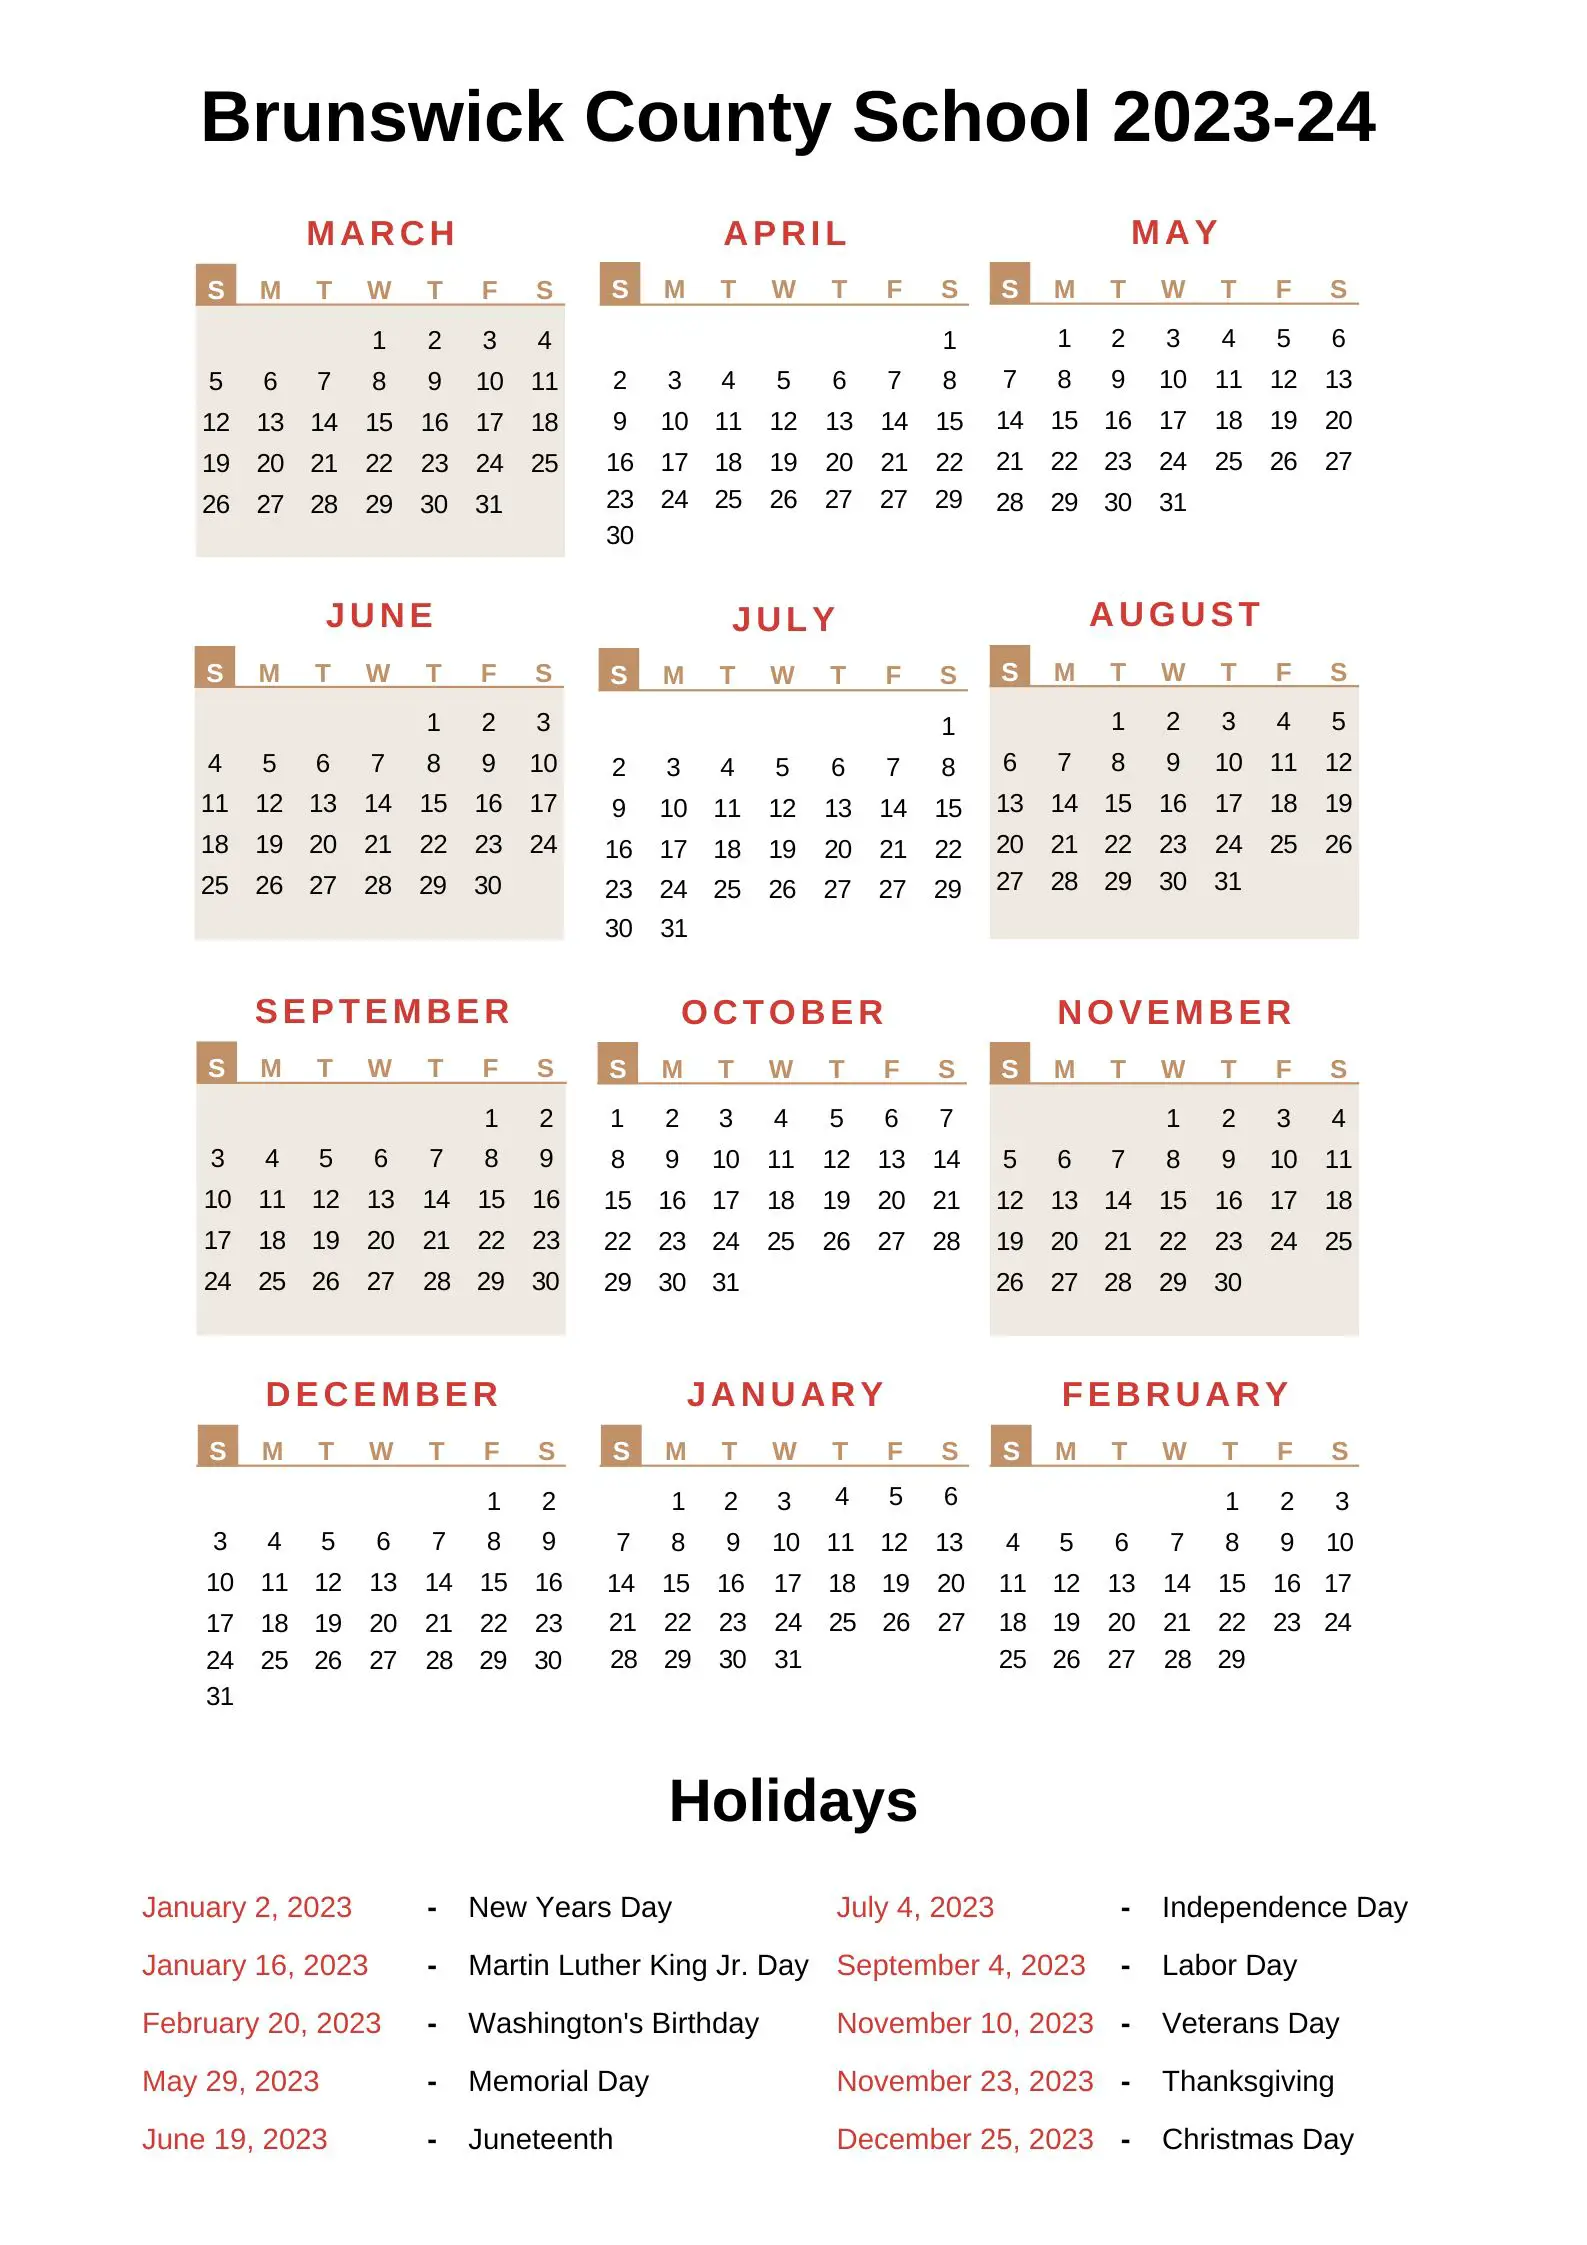 Brunswick County Schools Calendar 202324 With Holidays